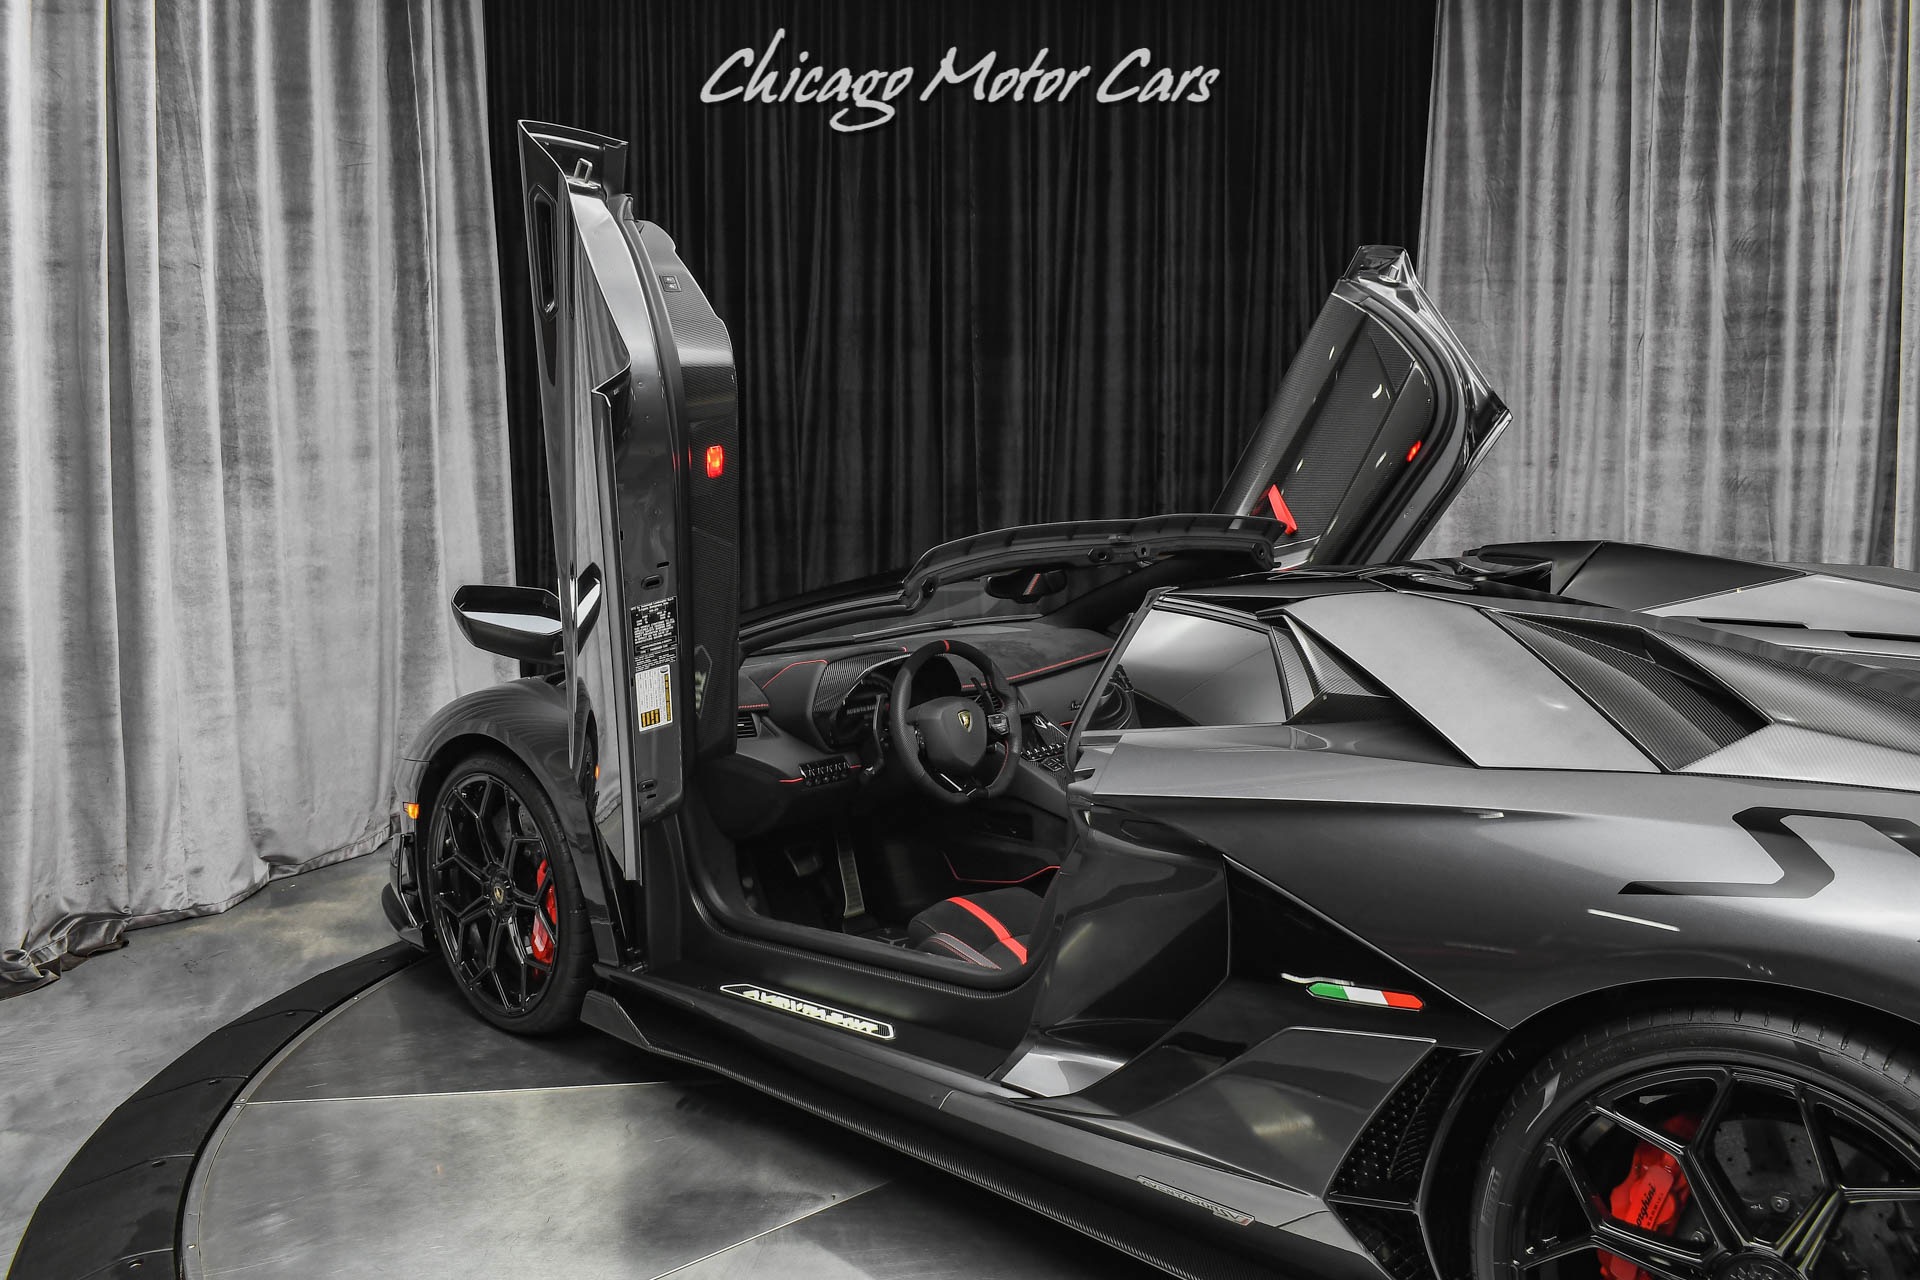 Used-2021-Lamborghini-Aventador-SVJ-Roadster-Only-1000-Miles-Carbon-Fiber-Full-Body-Paint-Protection-Film